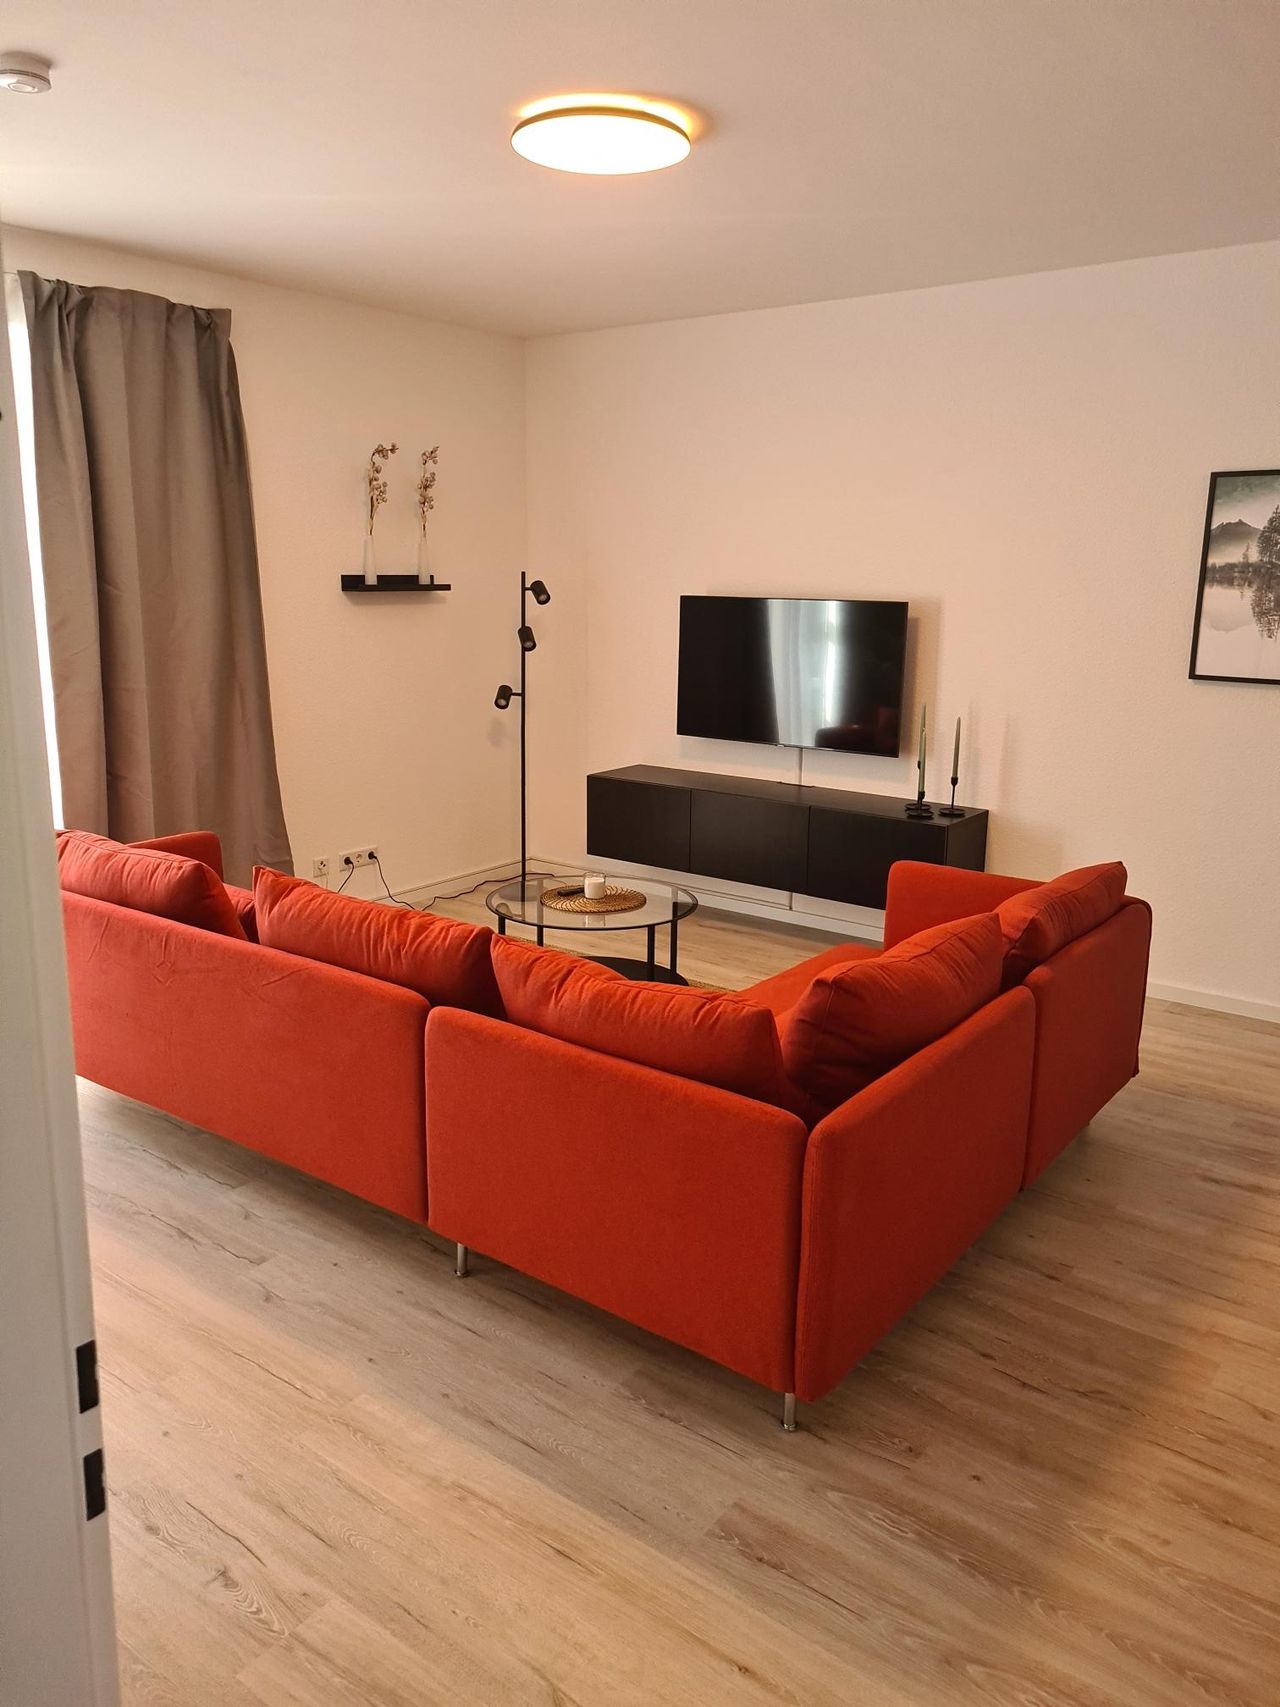 Spacious 4-room apartment with modern interior design